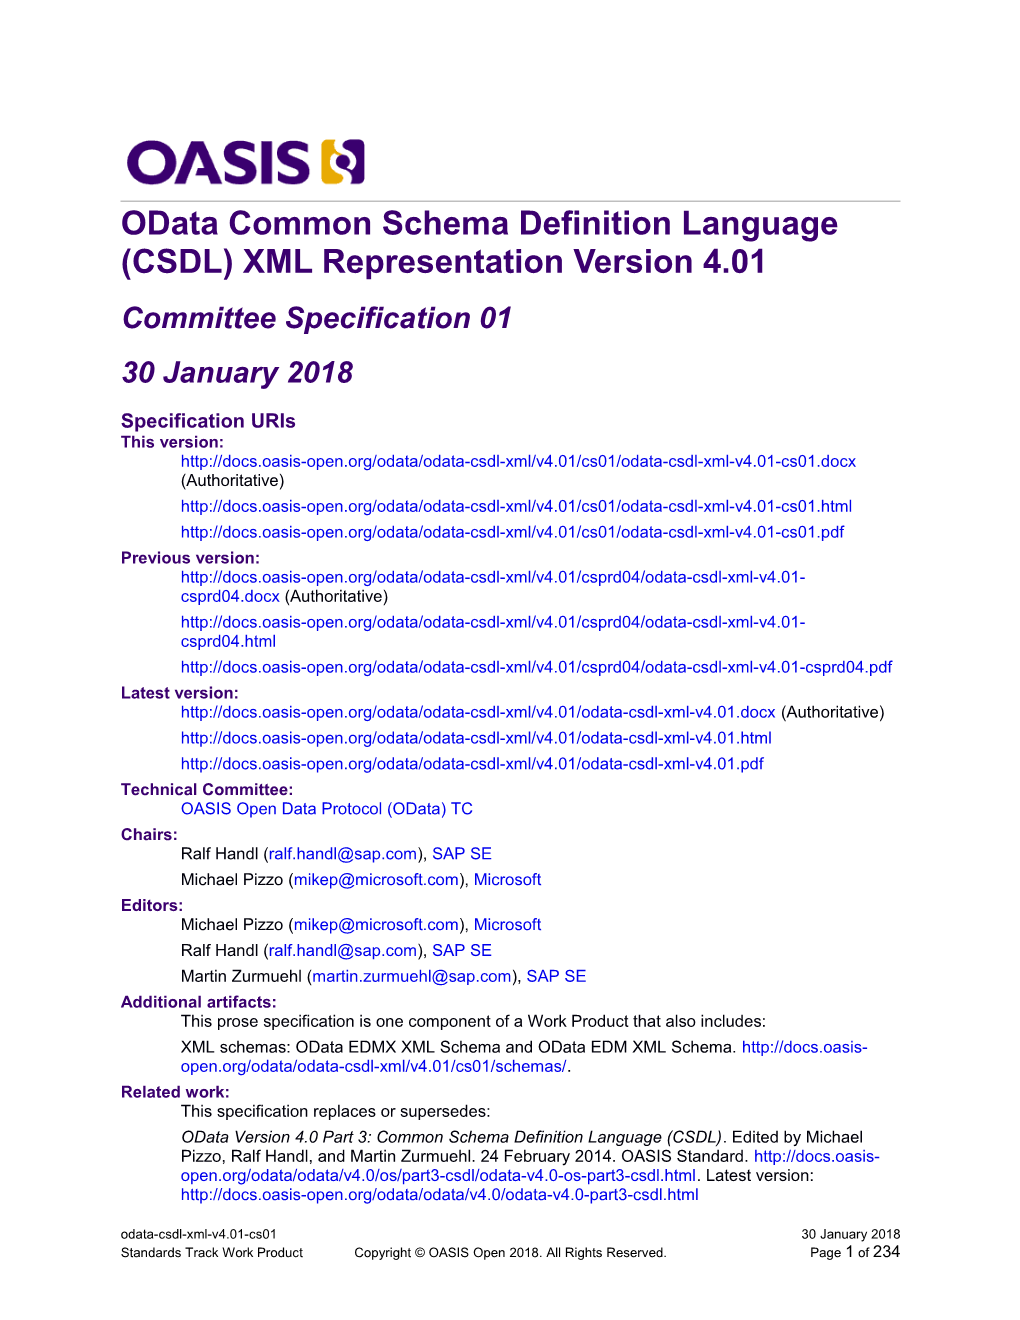 Odata Common Schema Definition Language (CSDL) XML Representation Version 4.01